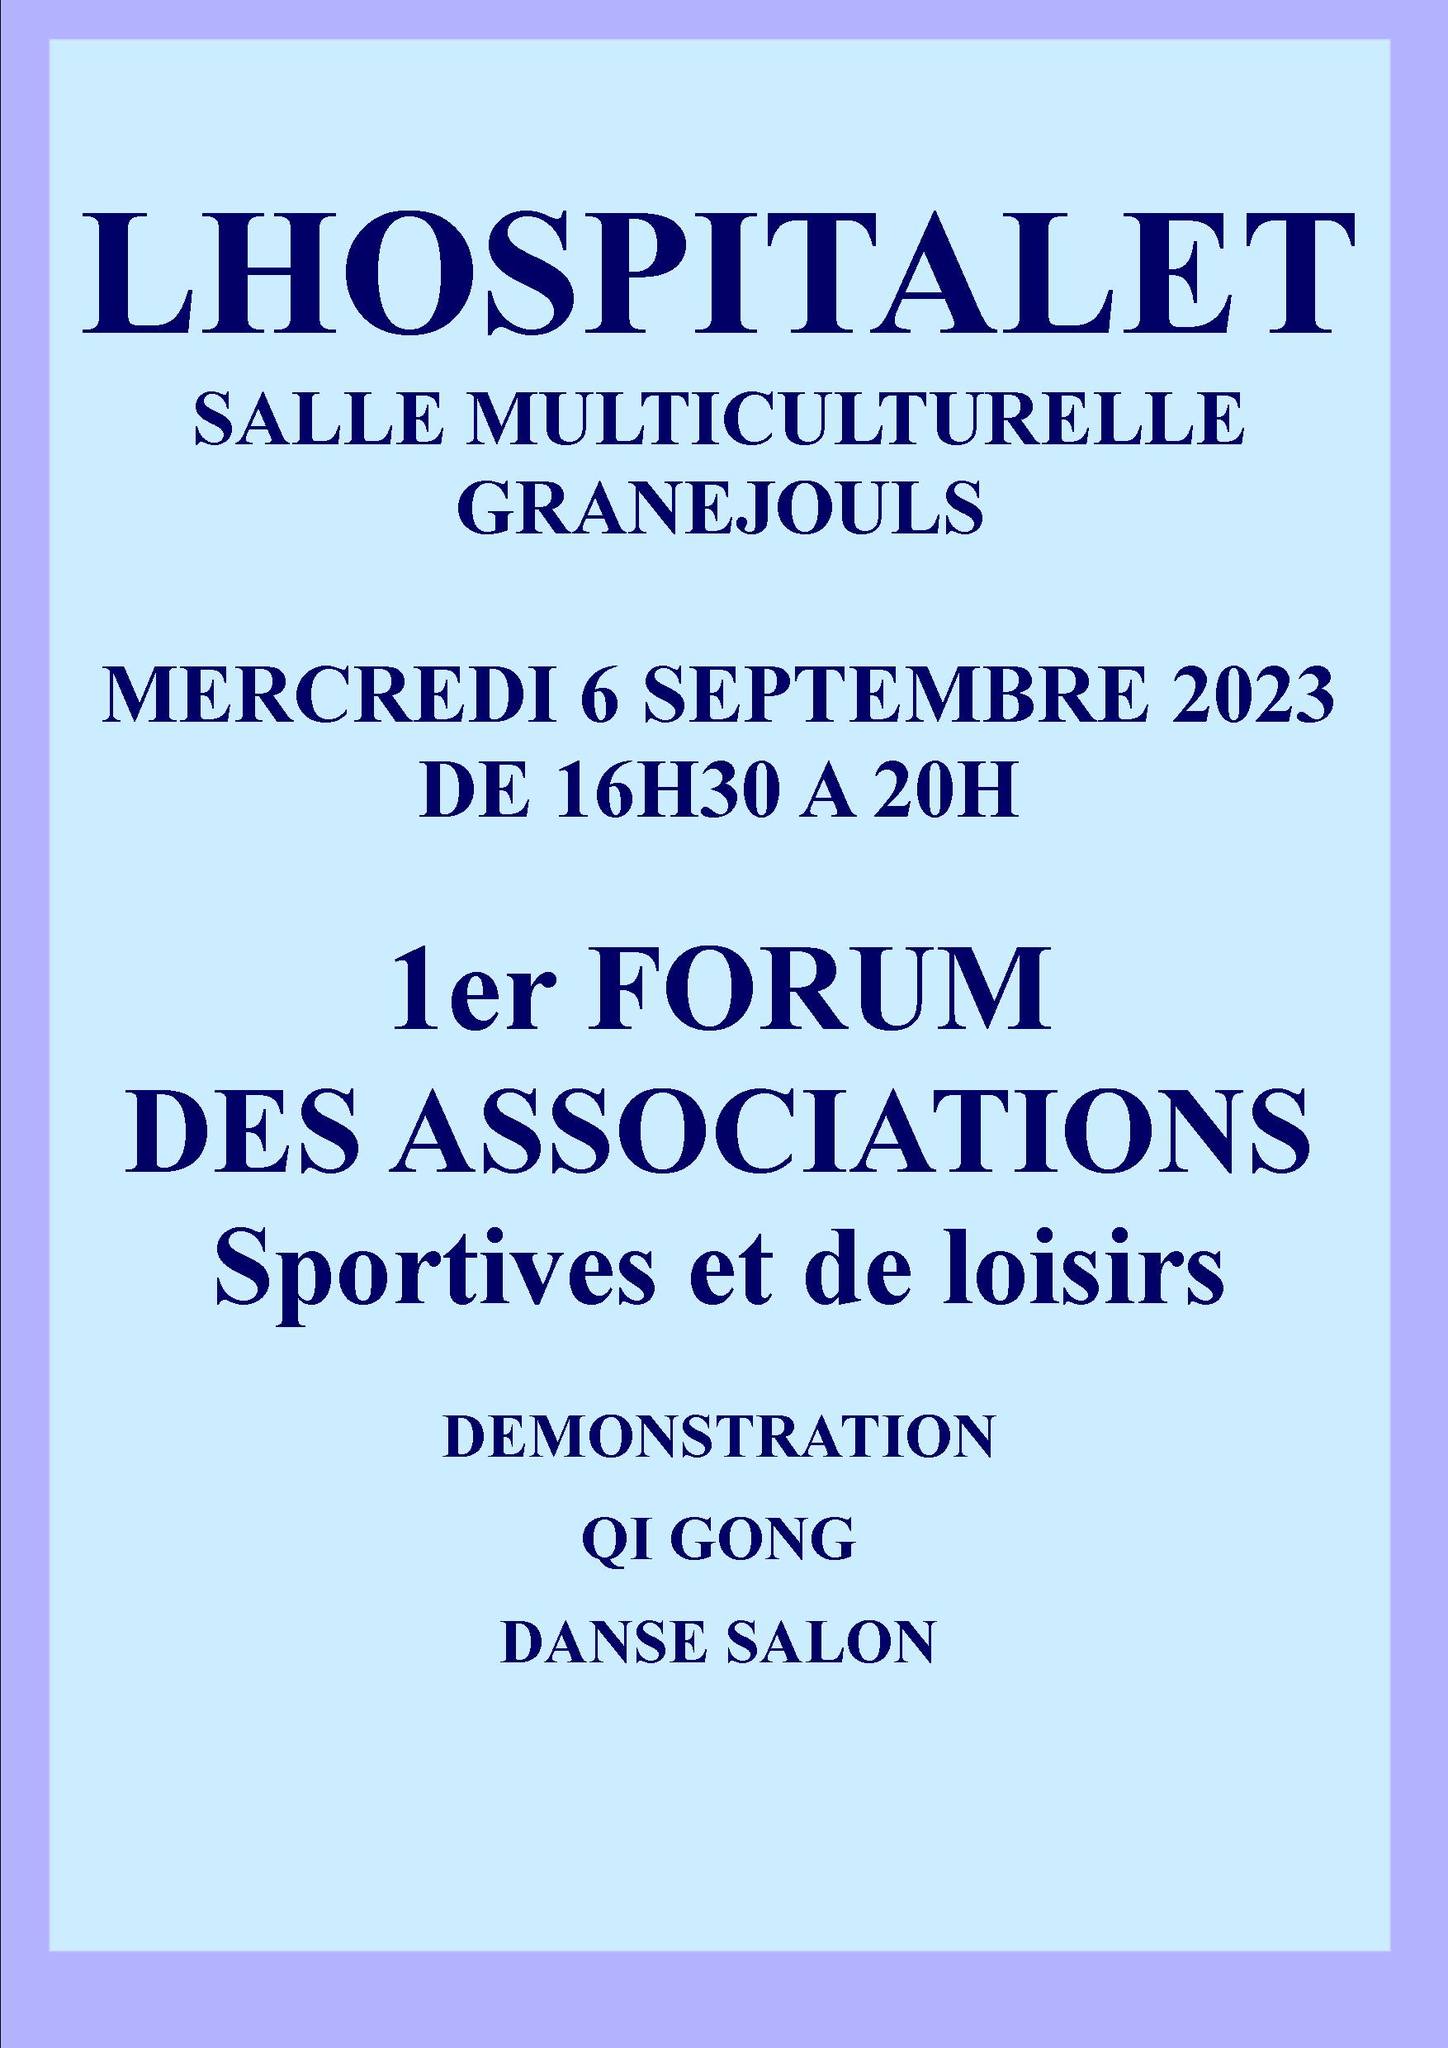 Forum des associations de Lhospitalet null France null null null null